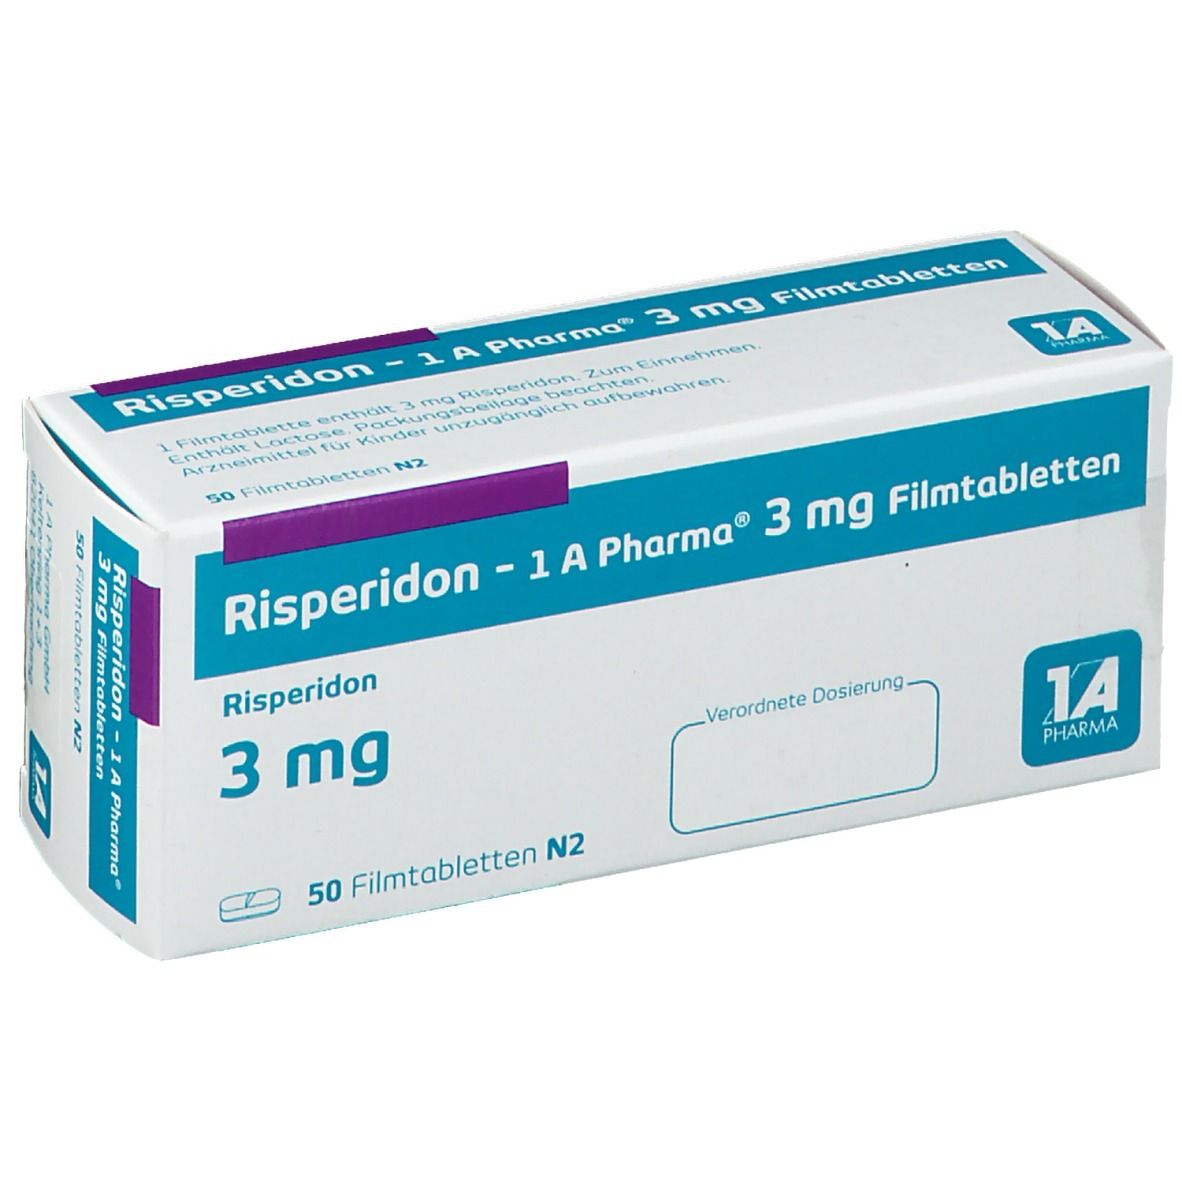 Risperidon - 1 A Pharma® 3 mg